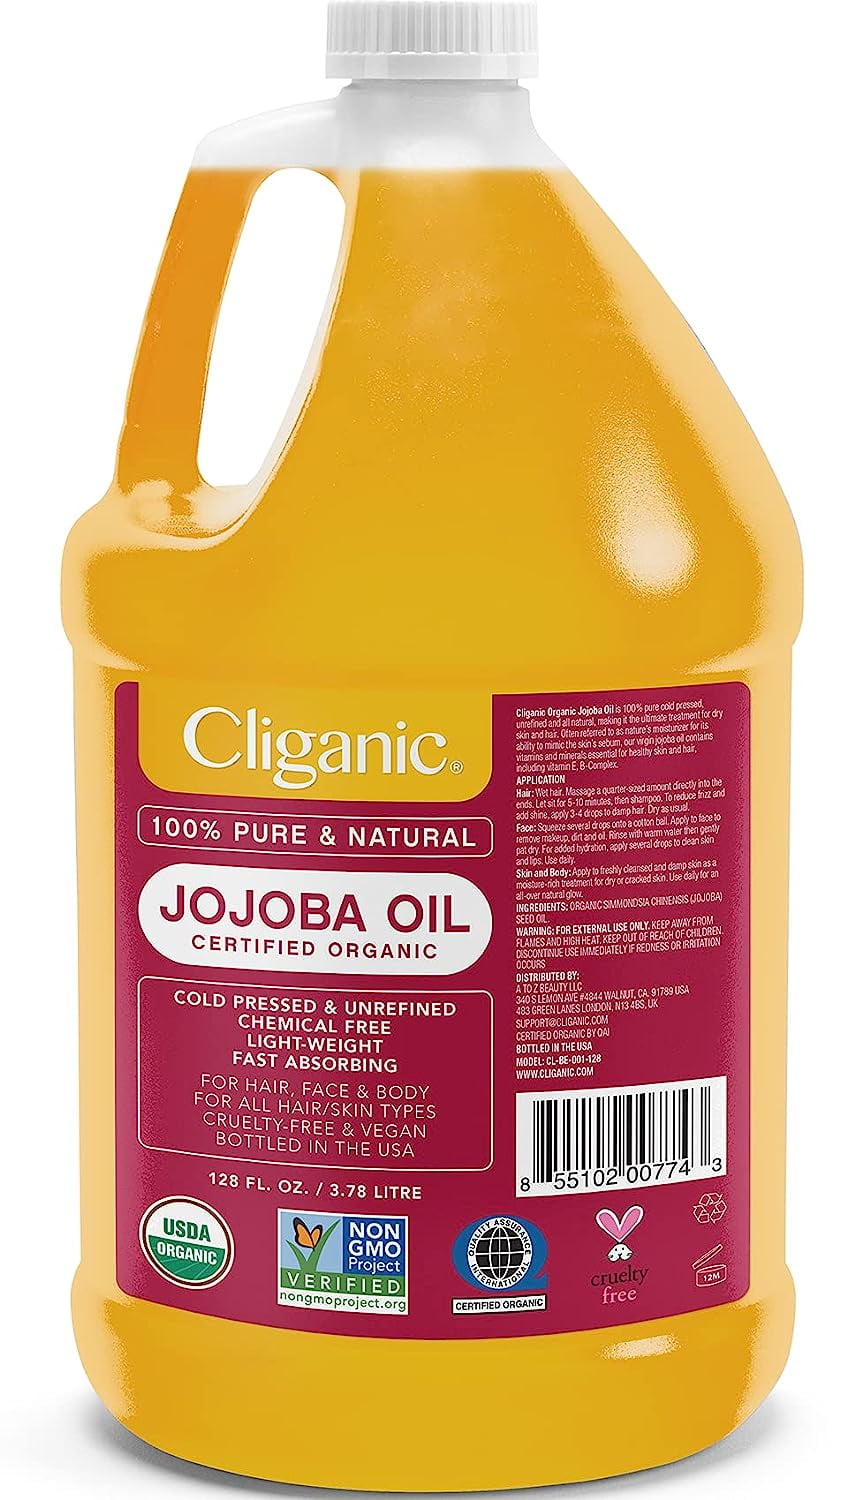 Cliganic USDA Organic Jojoba Oil - 4oz for sale online